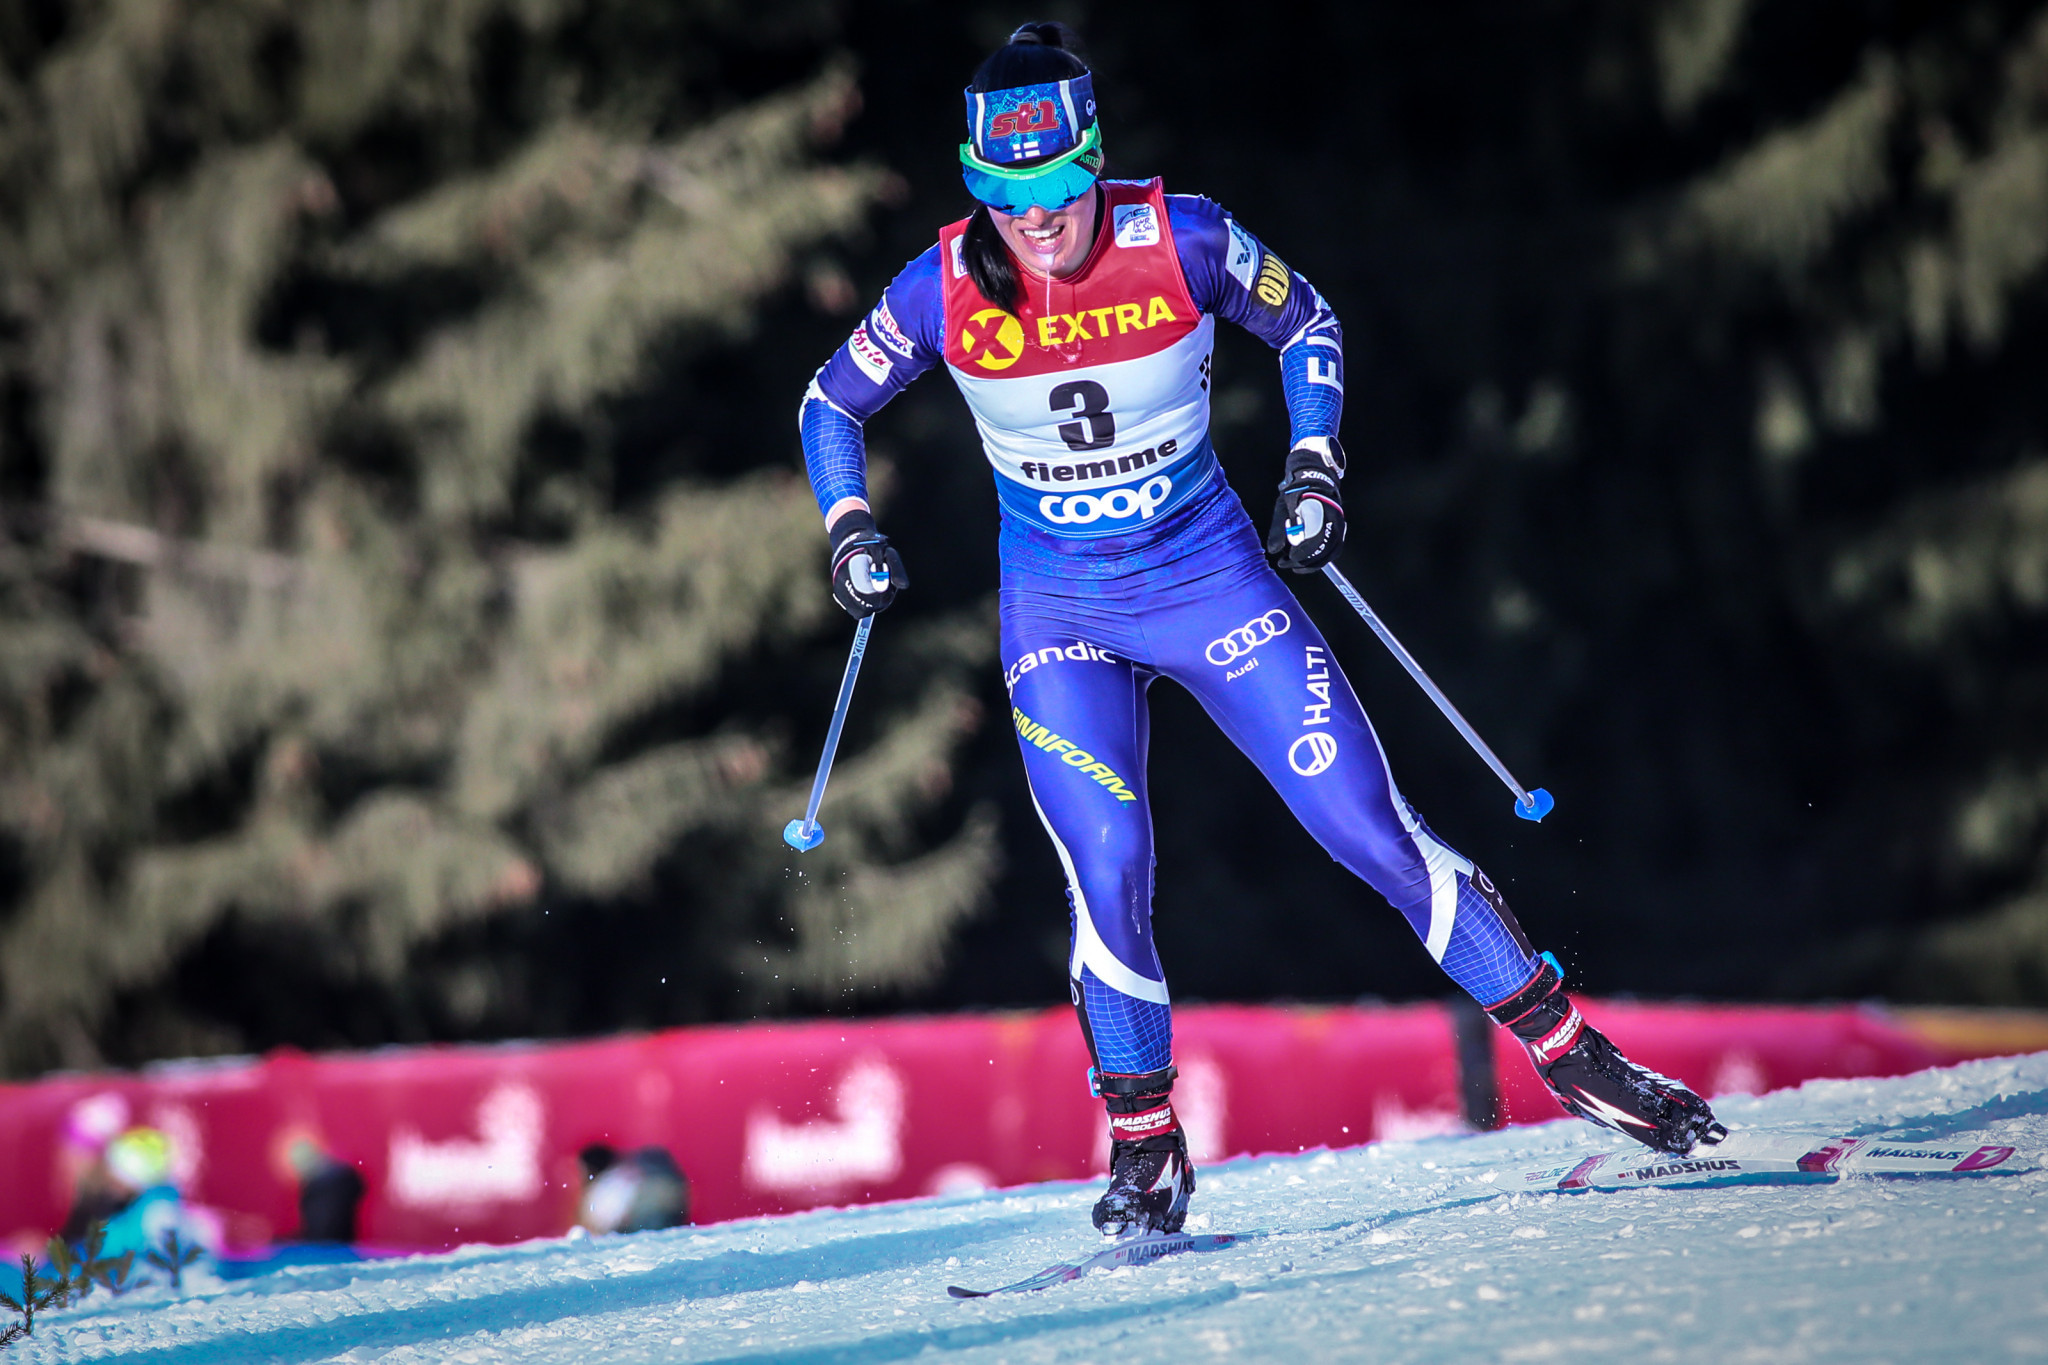 Krista Pärmäkoski has won six World Championship medals ©Getty Images